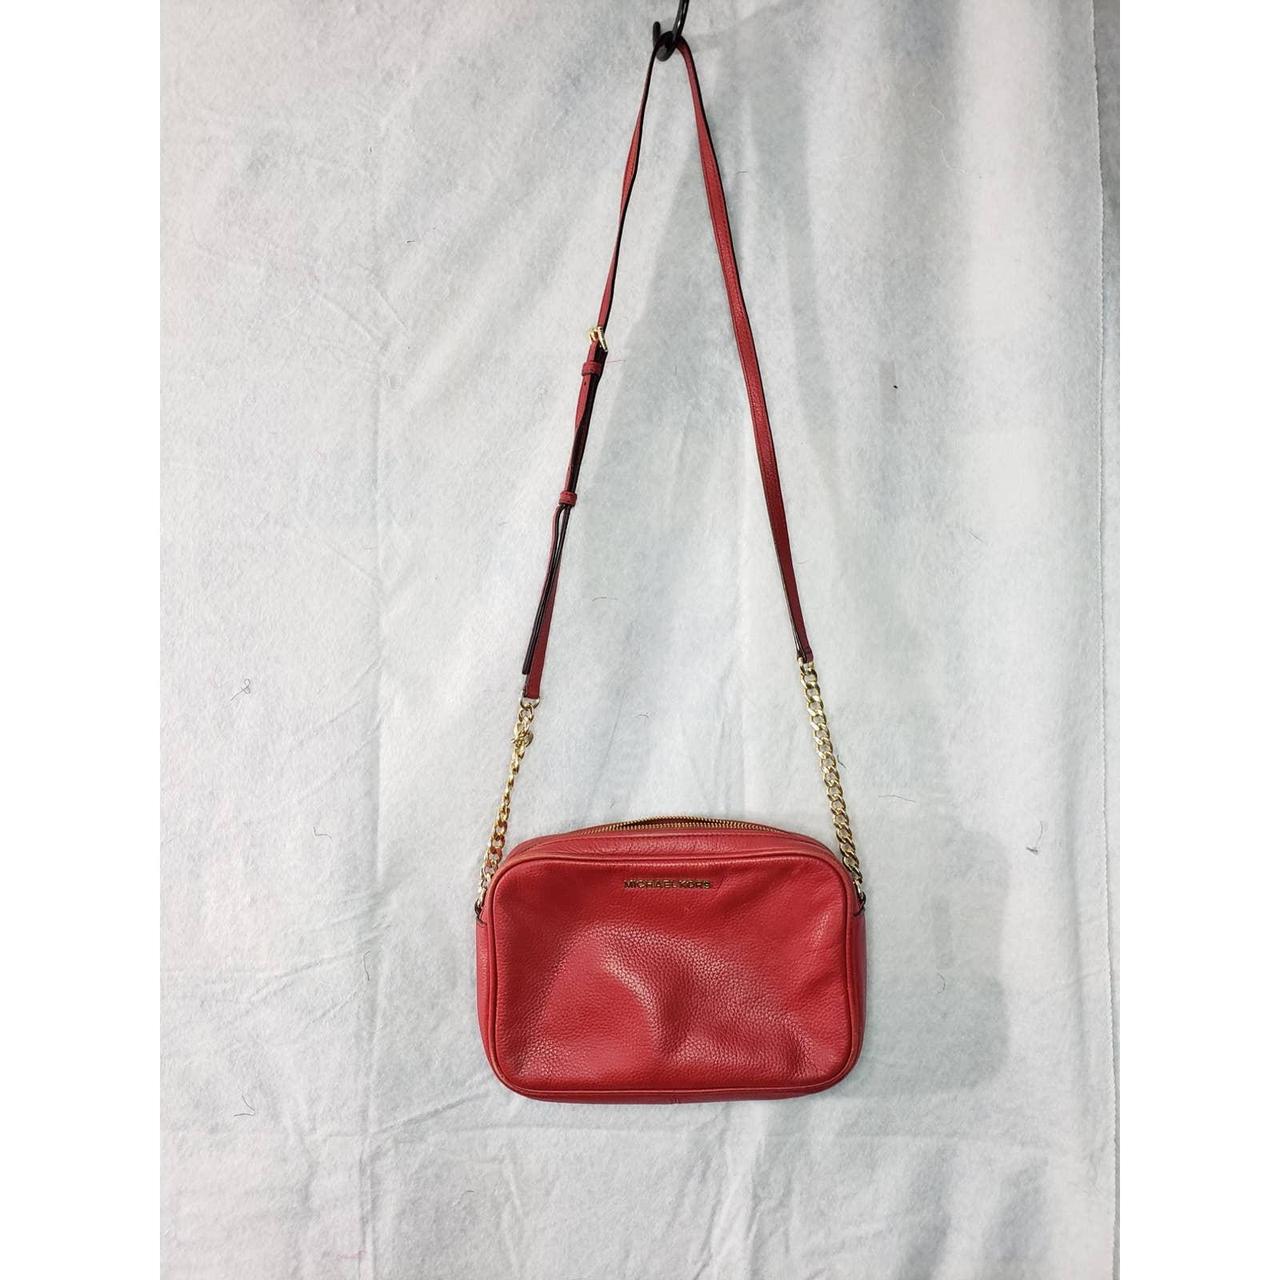 Red small Michael Kors shoulder bag crossbody purse. - Depop